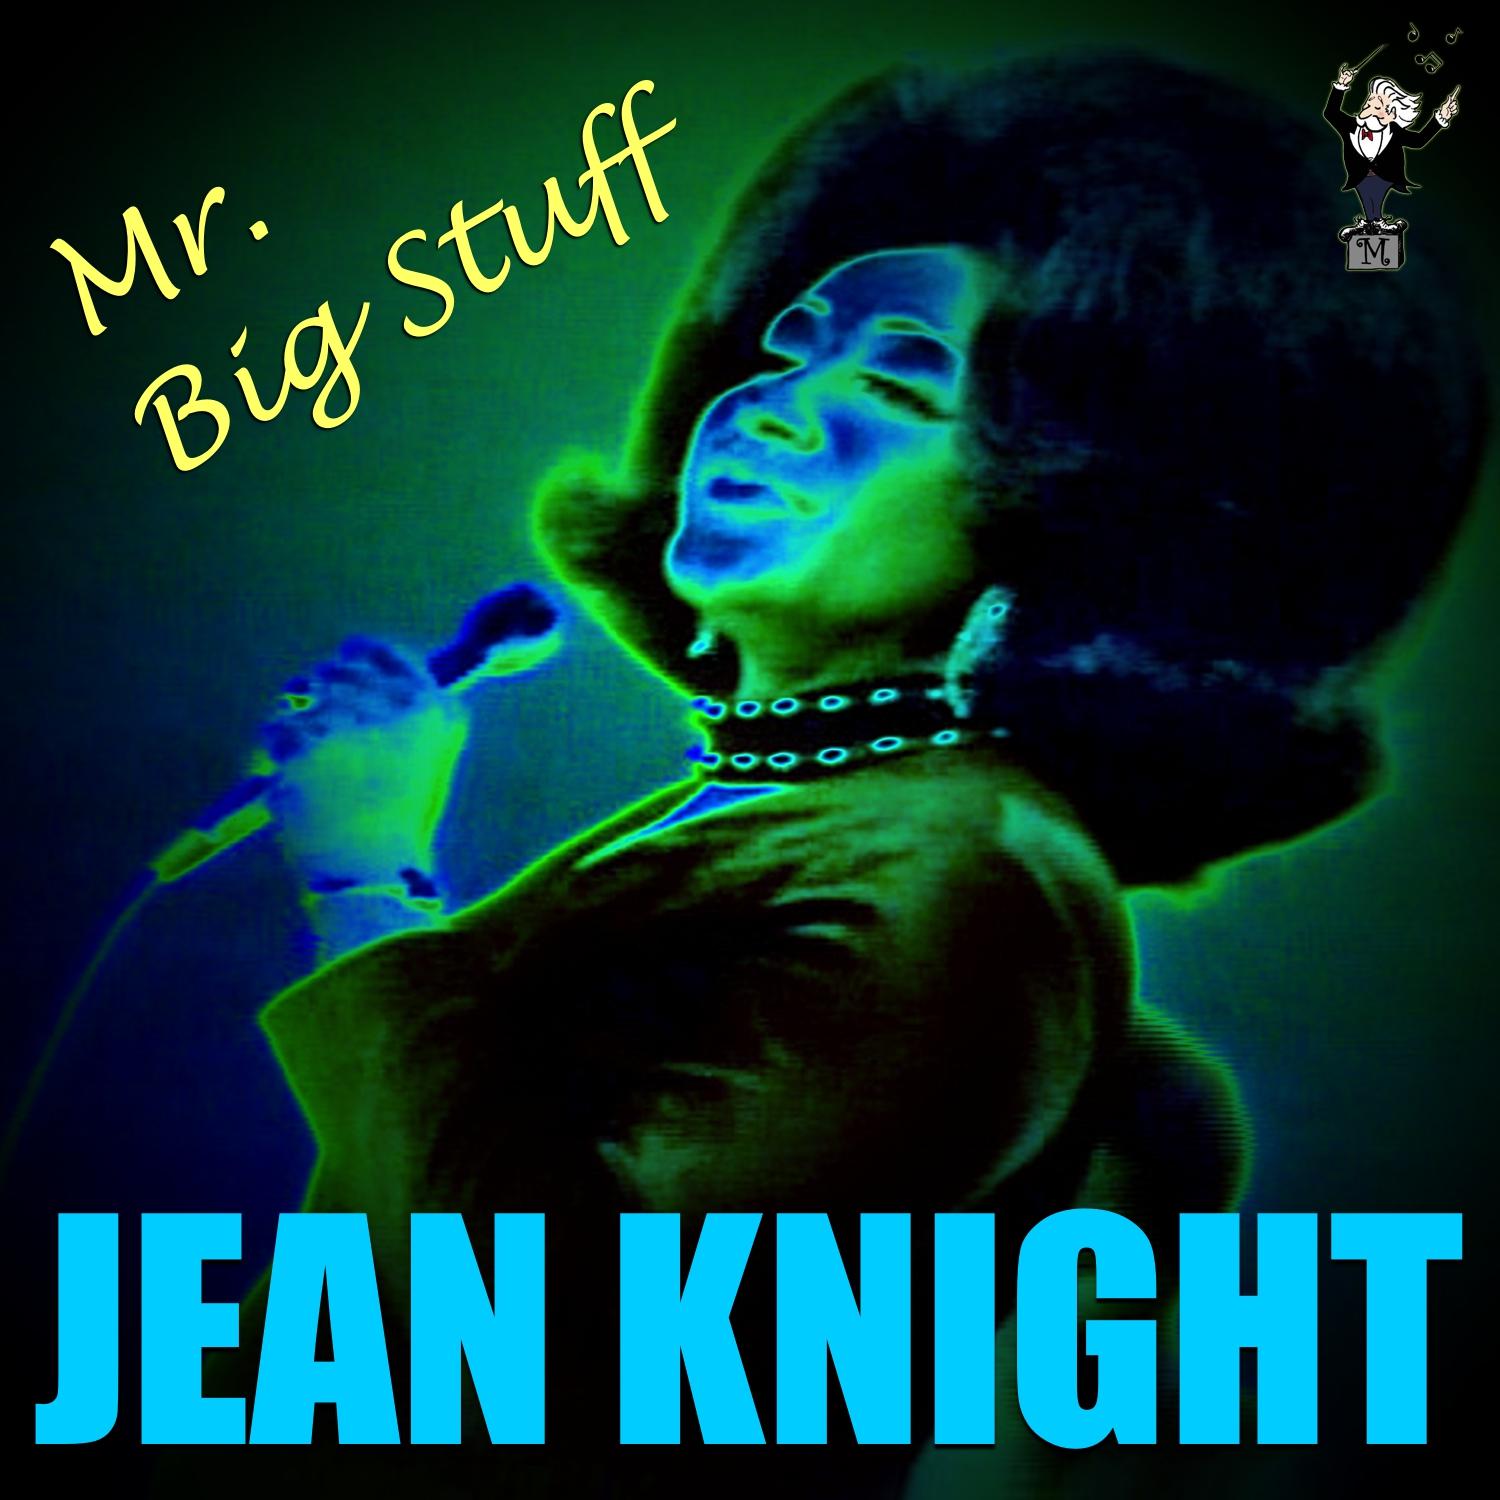 Jean Knight - I Love You